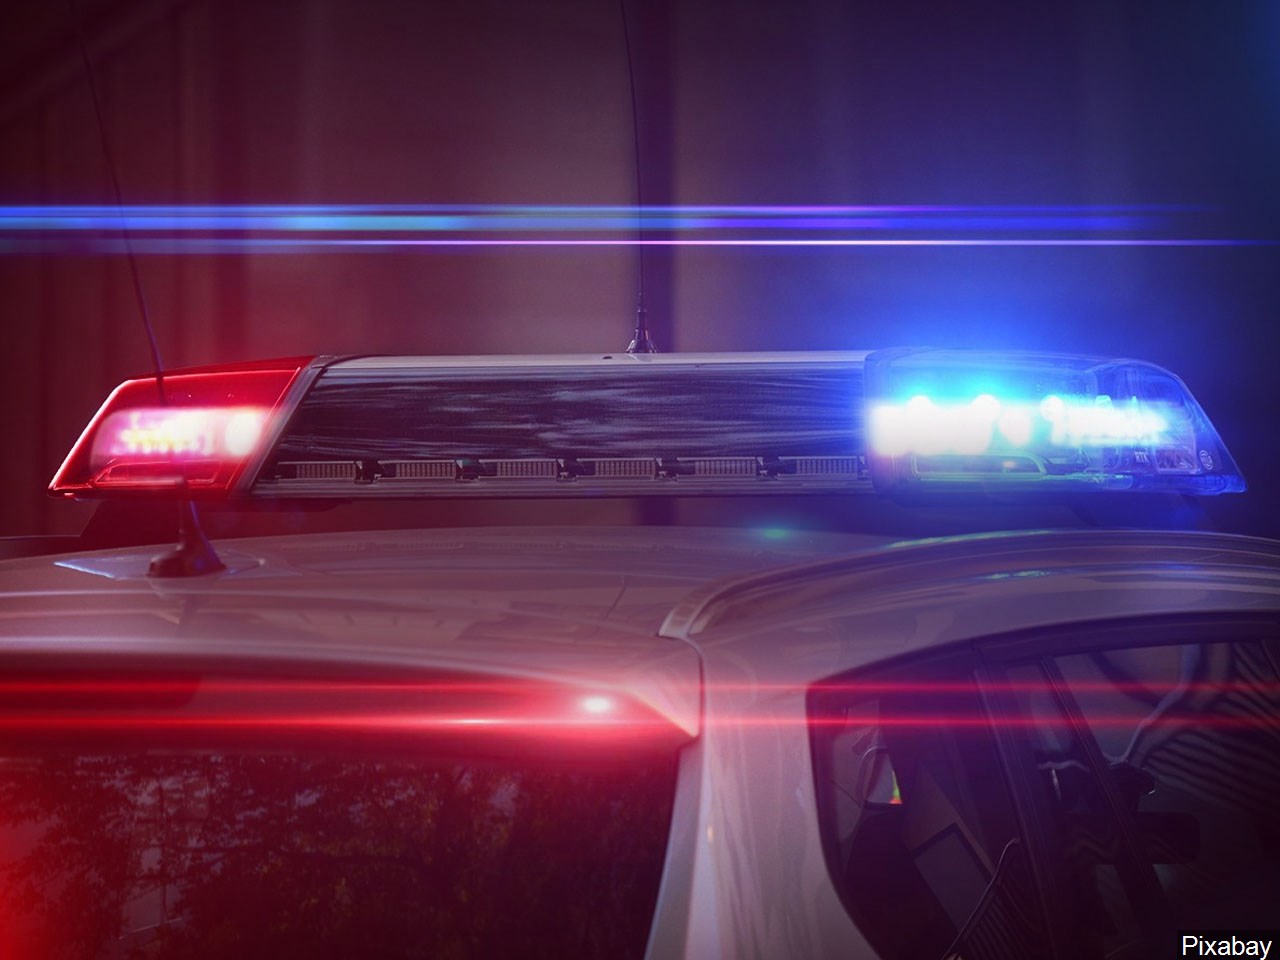 UPDATE: Birmingham police officer shot, 3 in custody